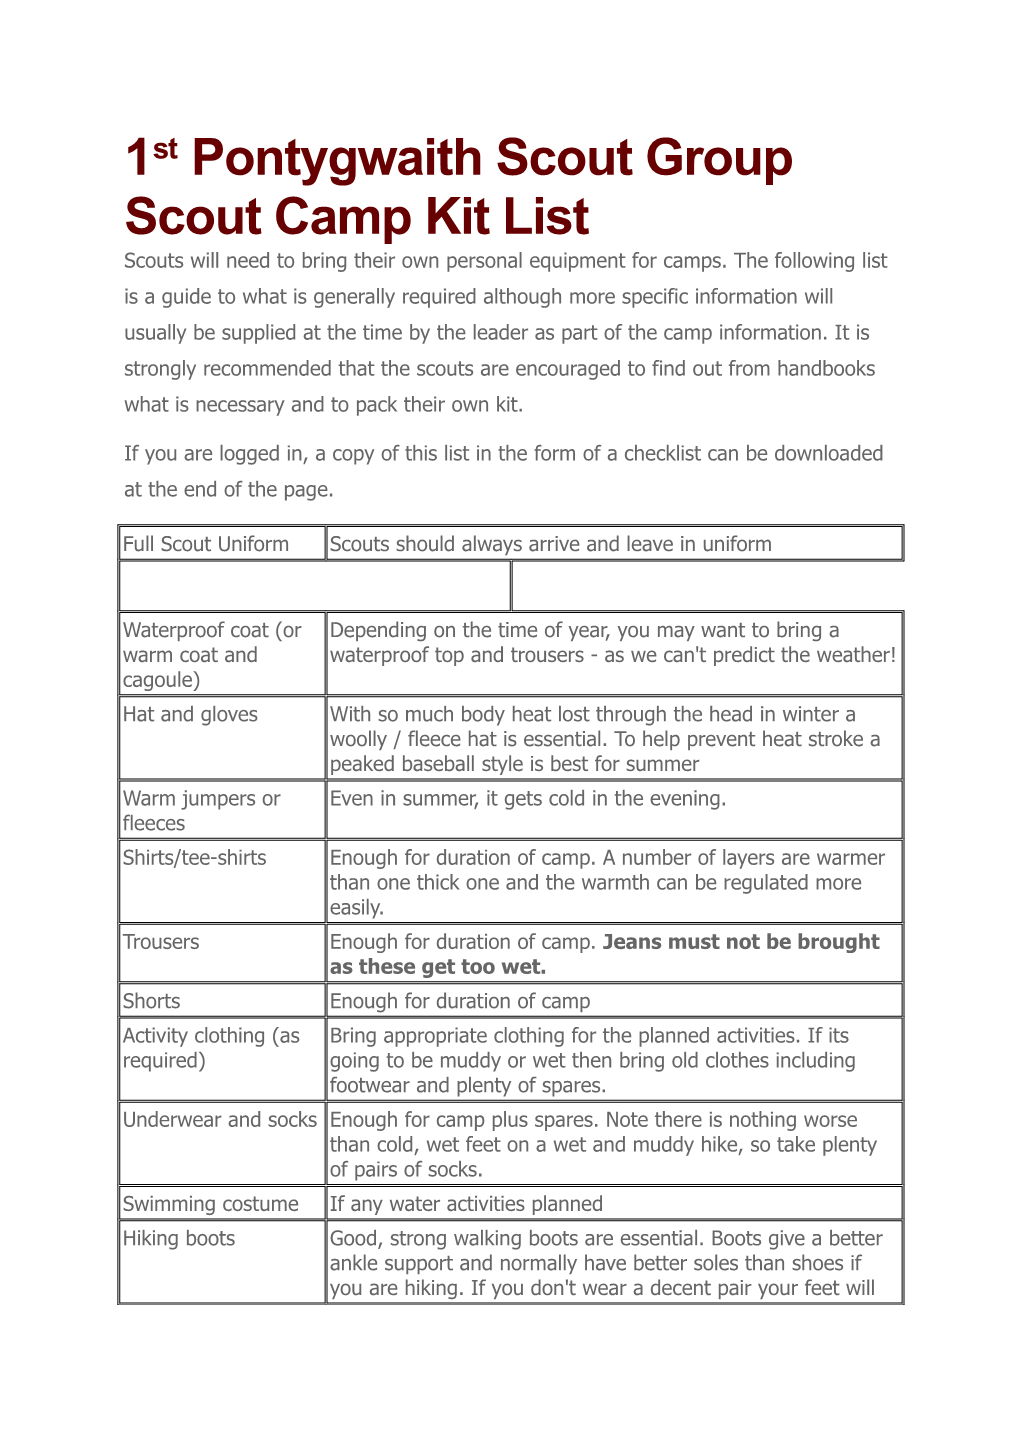 1St Pontygwaith Scout Group Scout Camp Kit List